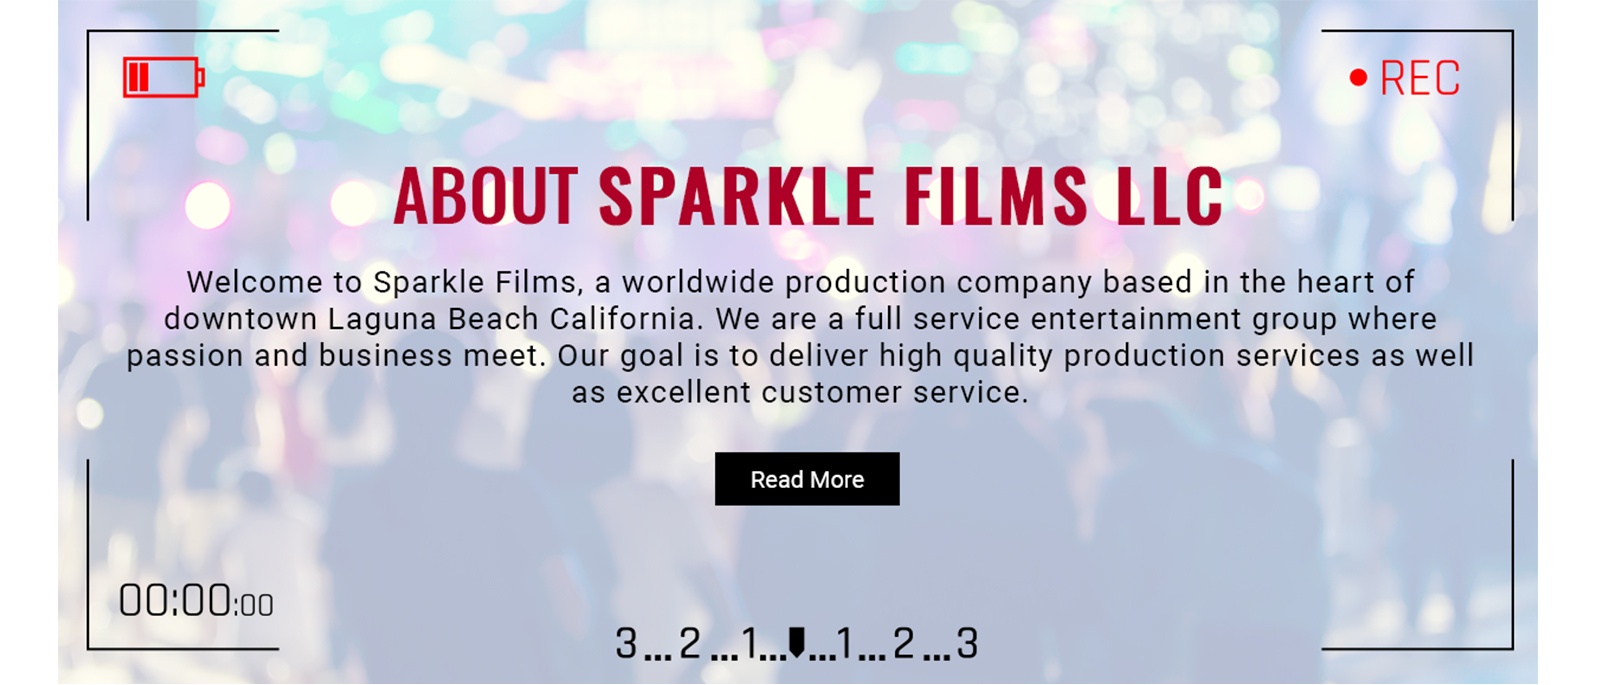 About Sparkle Films LLC - Video Production Company Orange County by Sparkle Films LLC